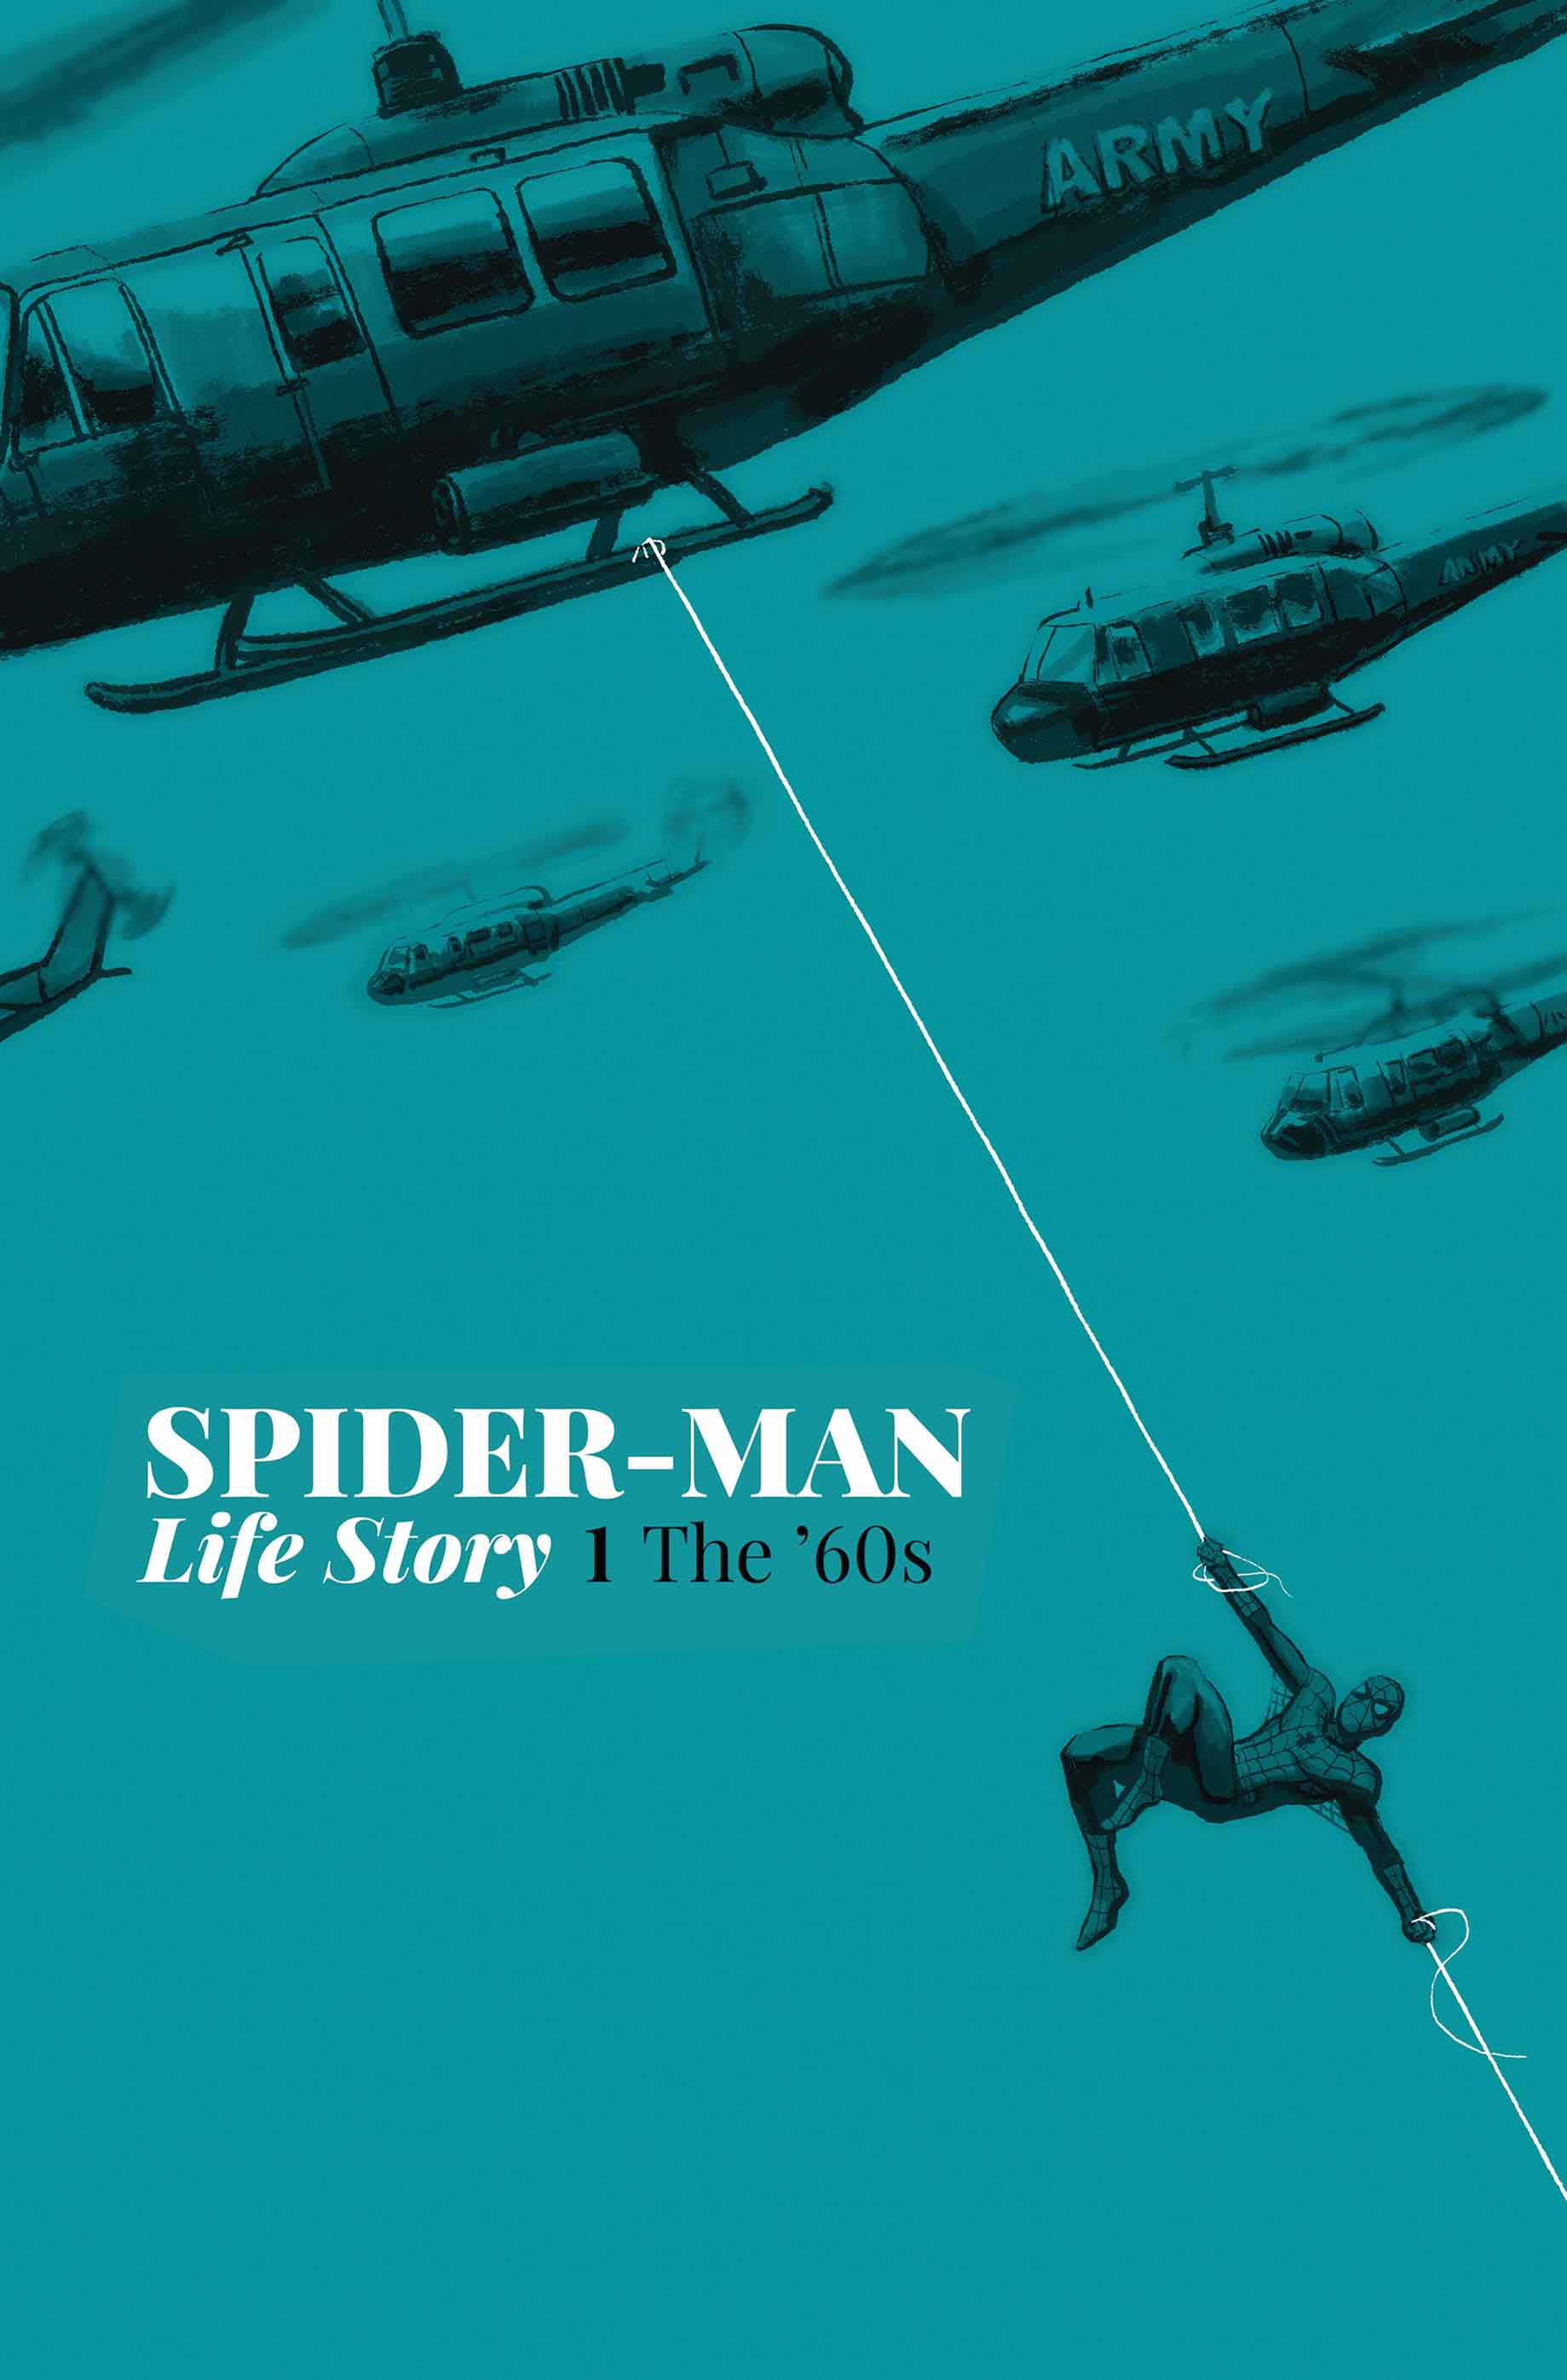 SPIDER-MAN LIFE STORY #1 03/20/19 FOC 02/25/19